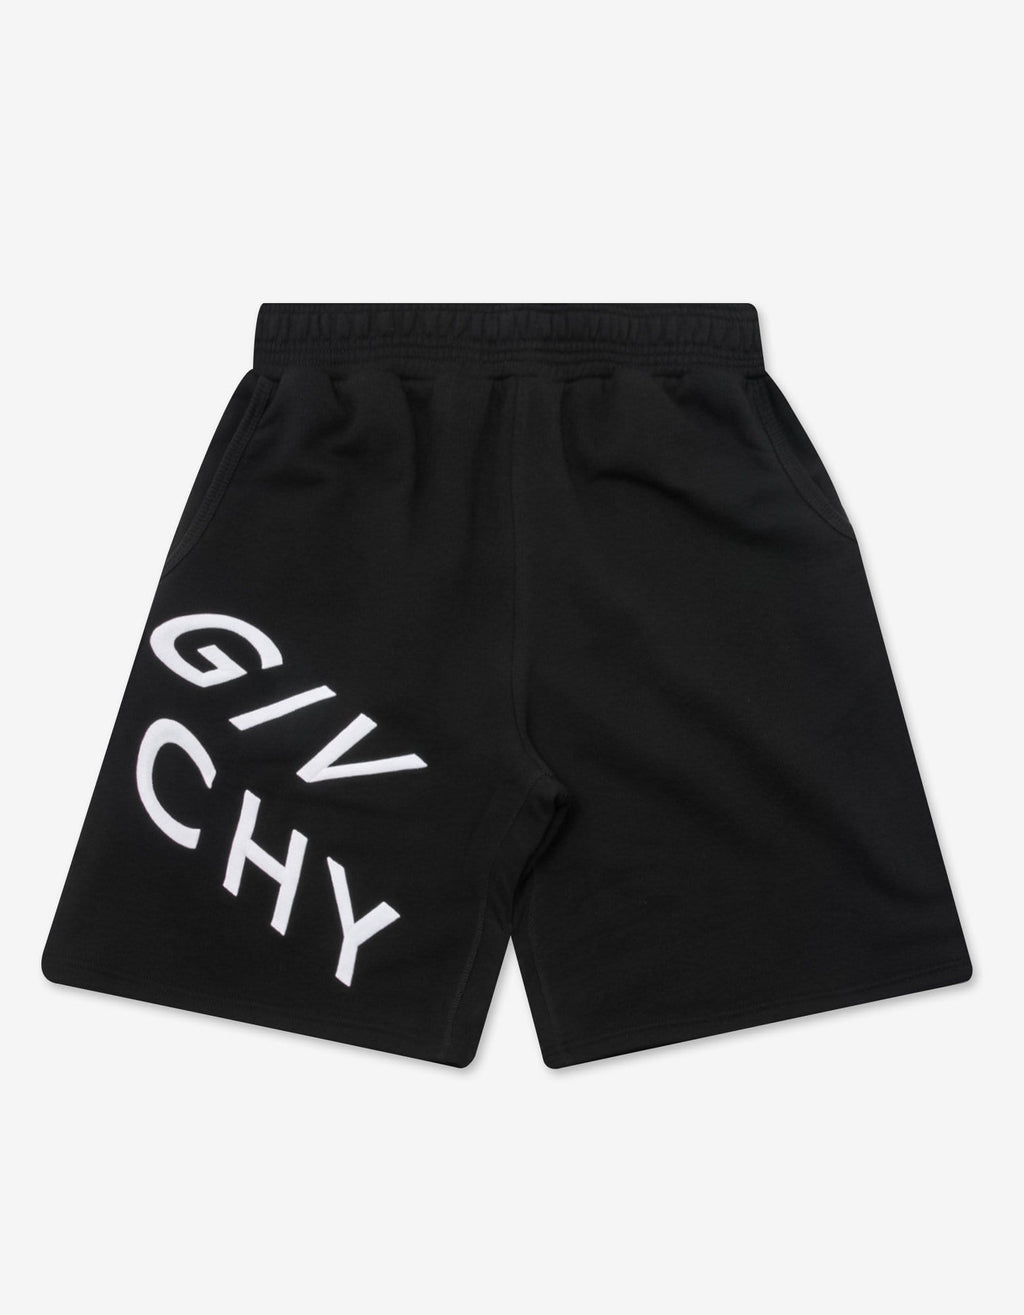 Givenchy Givenchy Black Refracted Logo Sweat Shorts